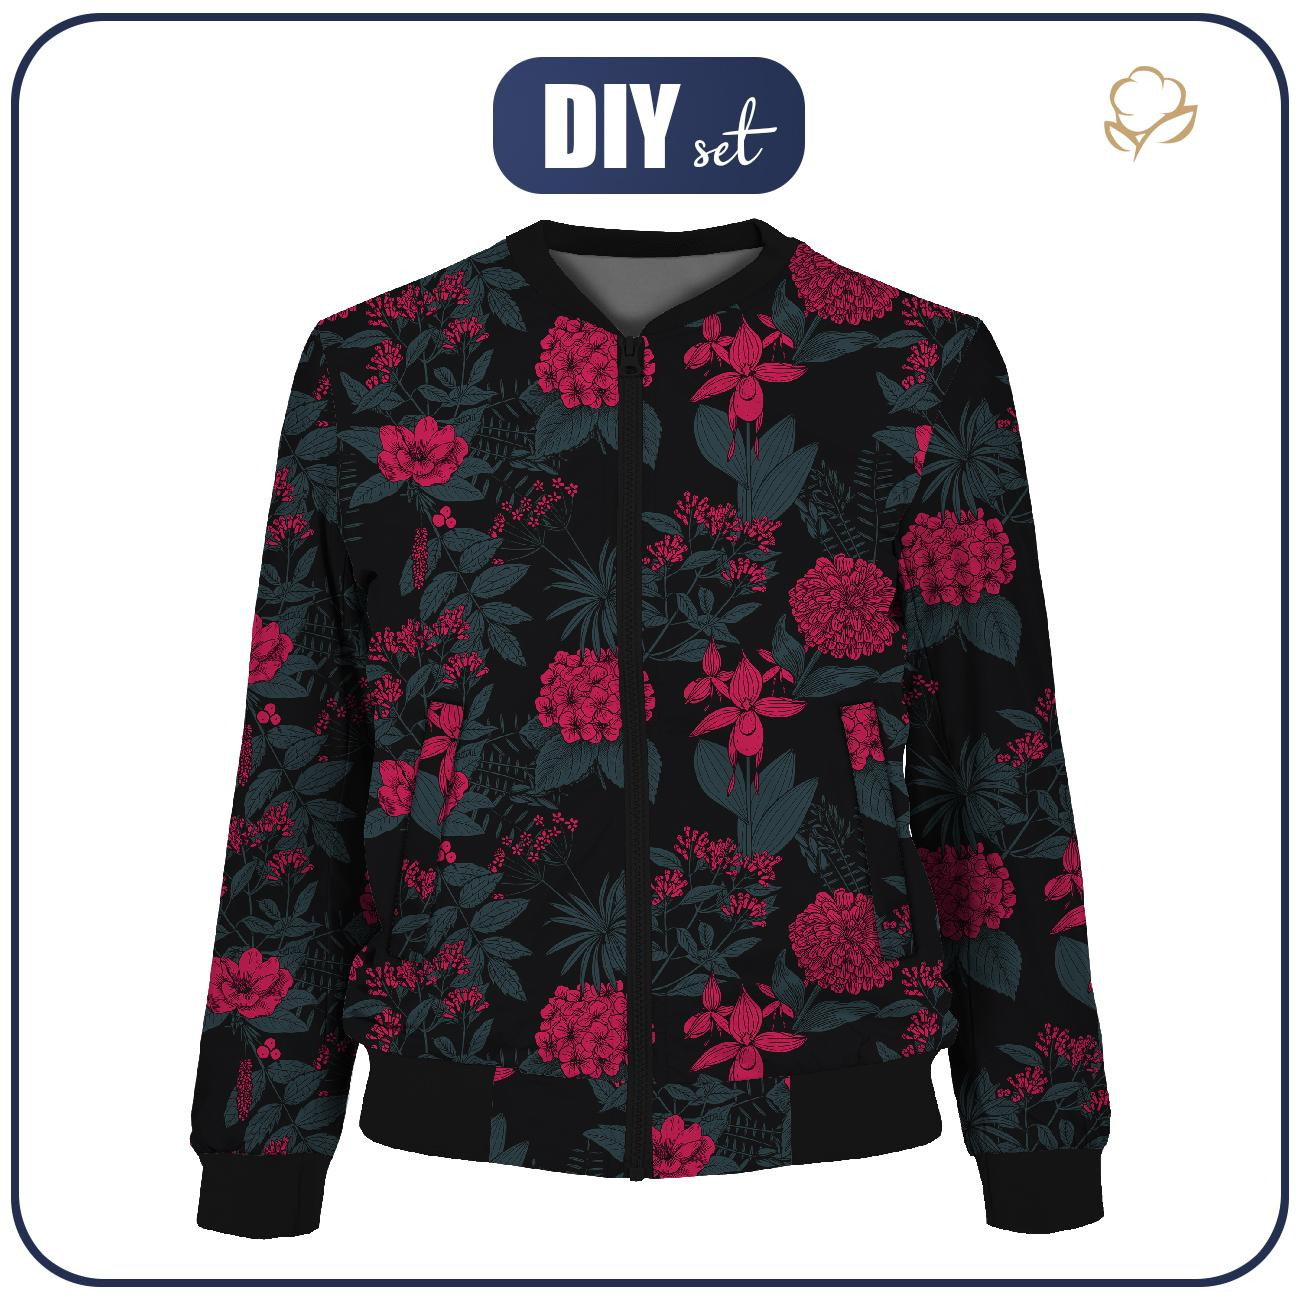 Milan Quilted Fleece Jacket - Floral Reef